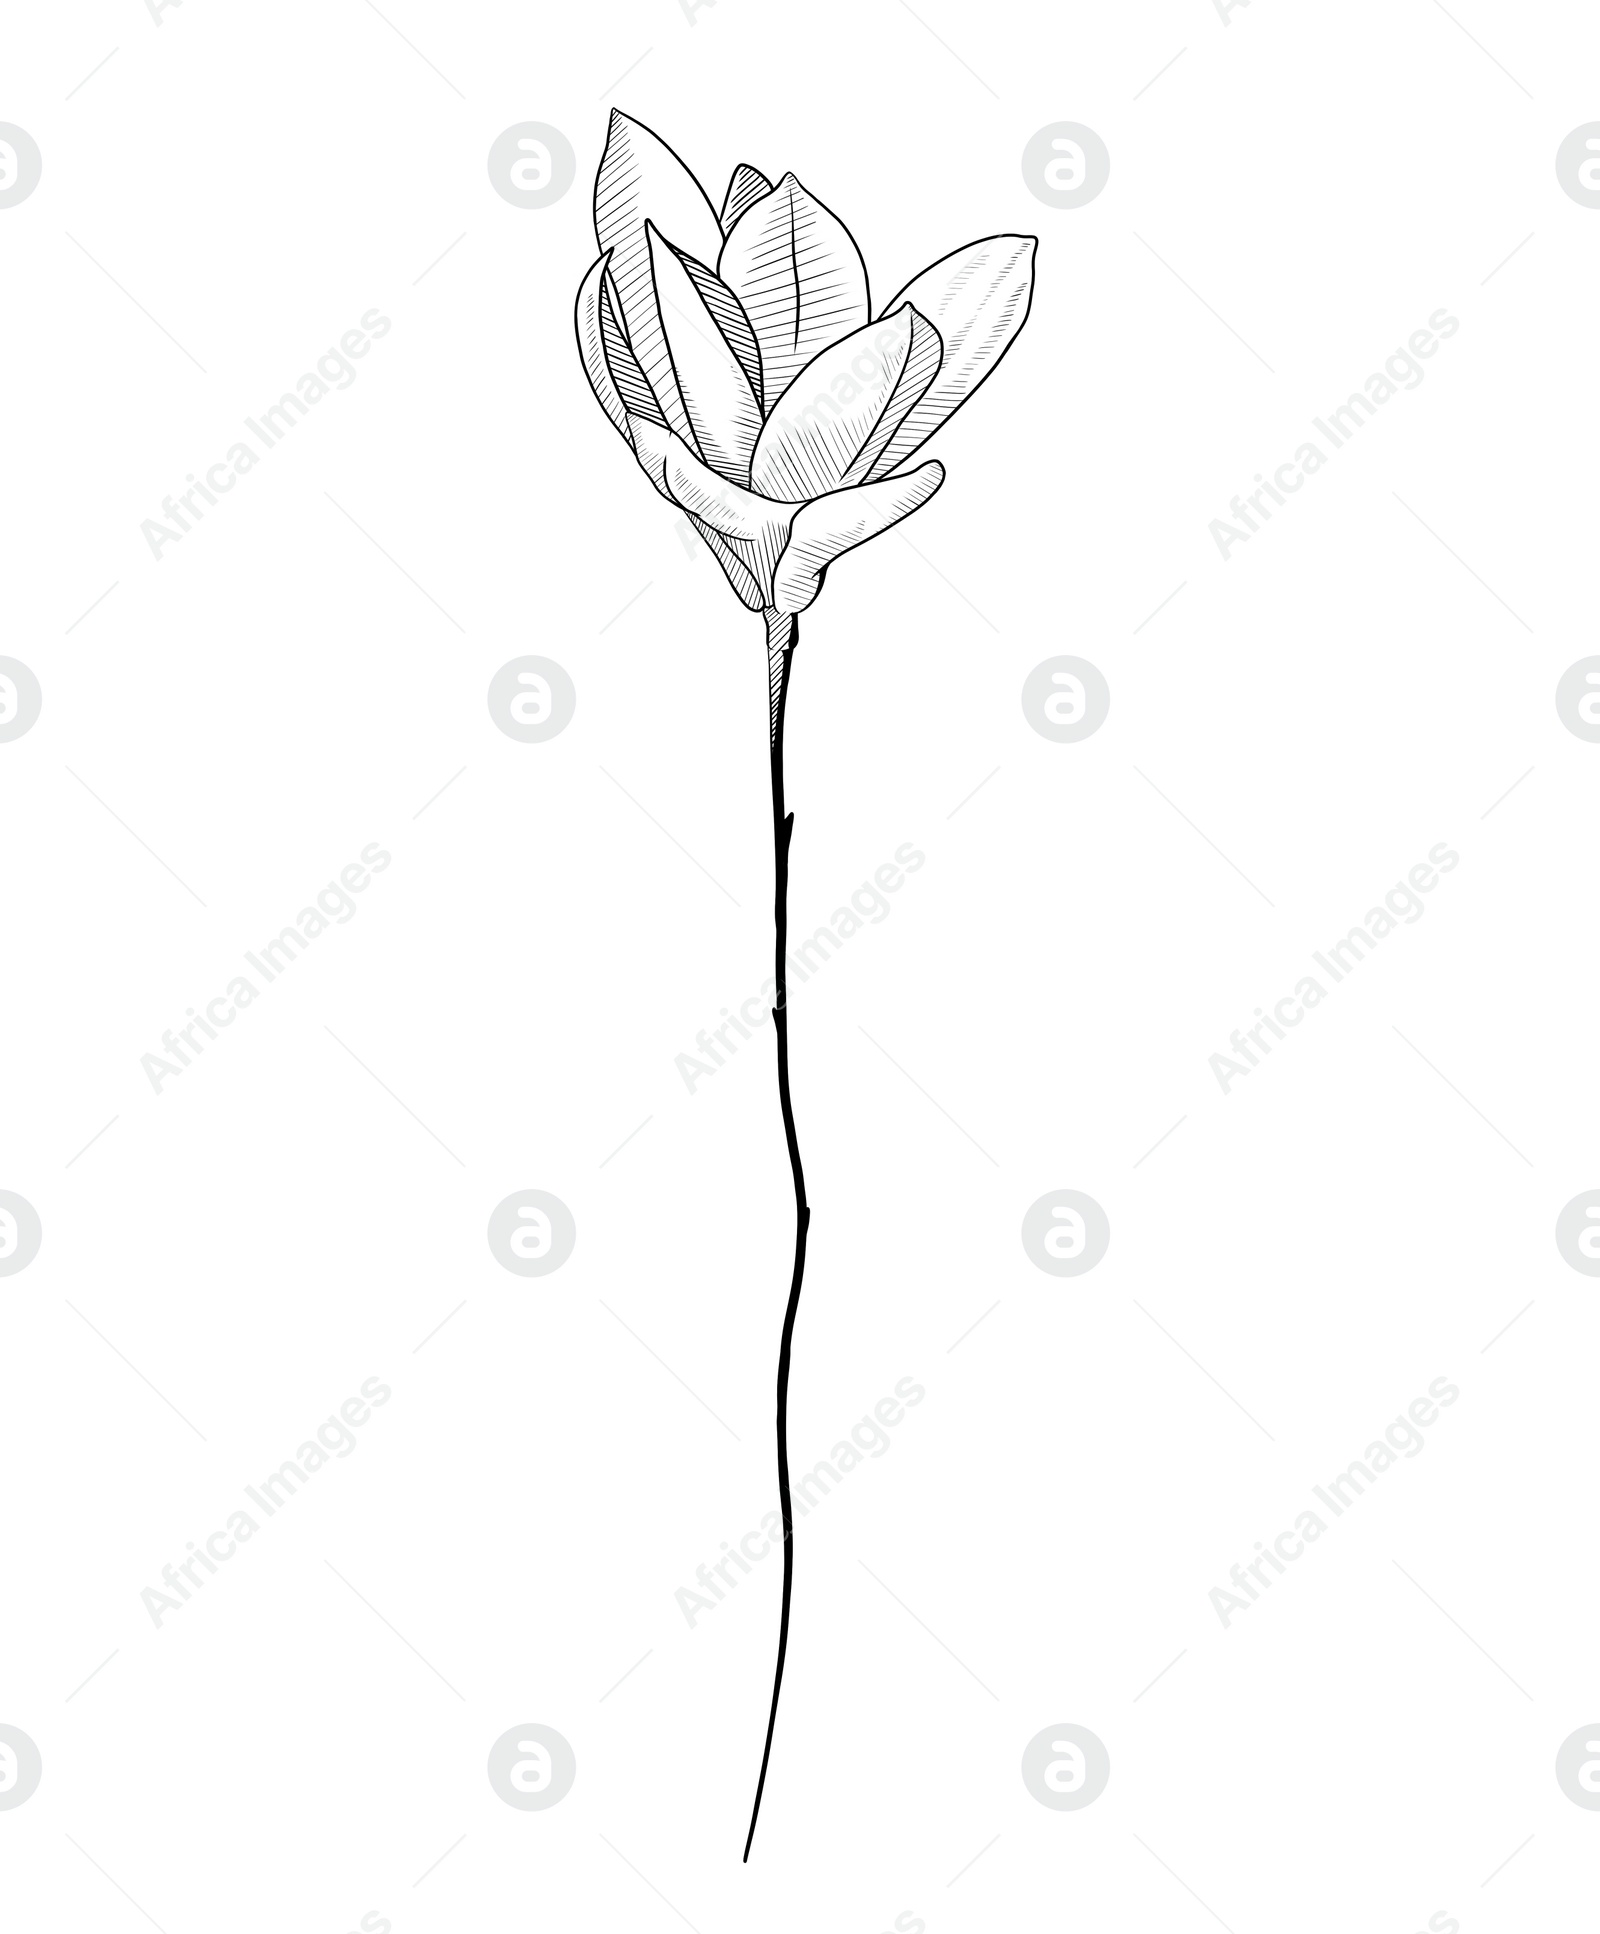 Illustration of Blooming magnolia flower on white background. Black and white illustration